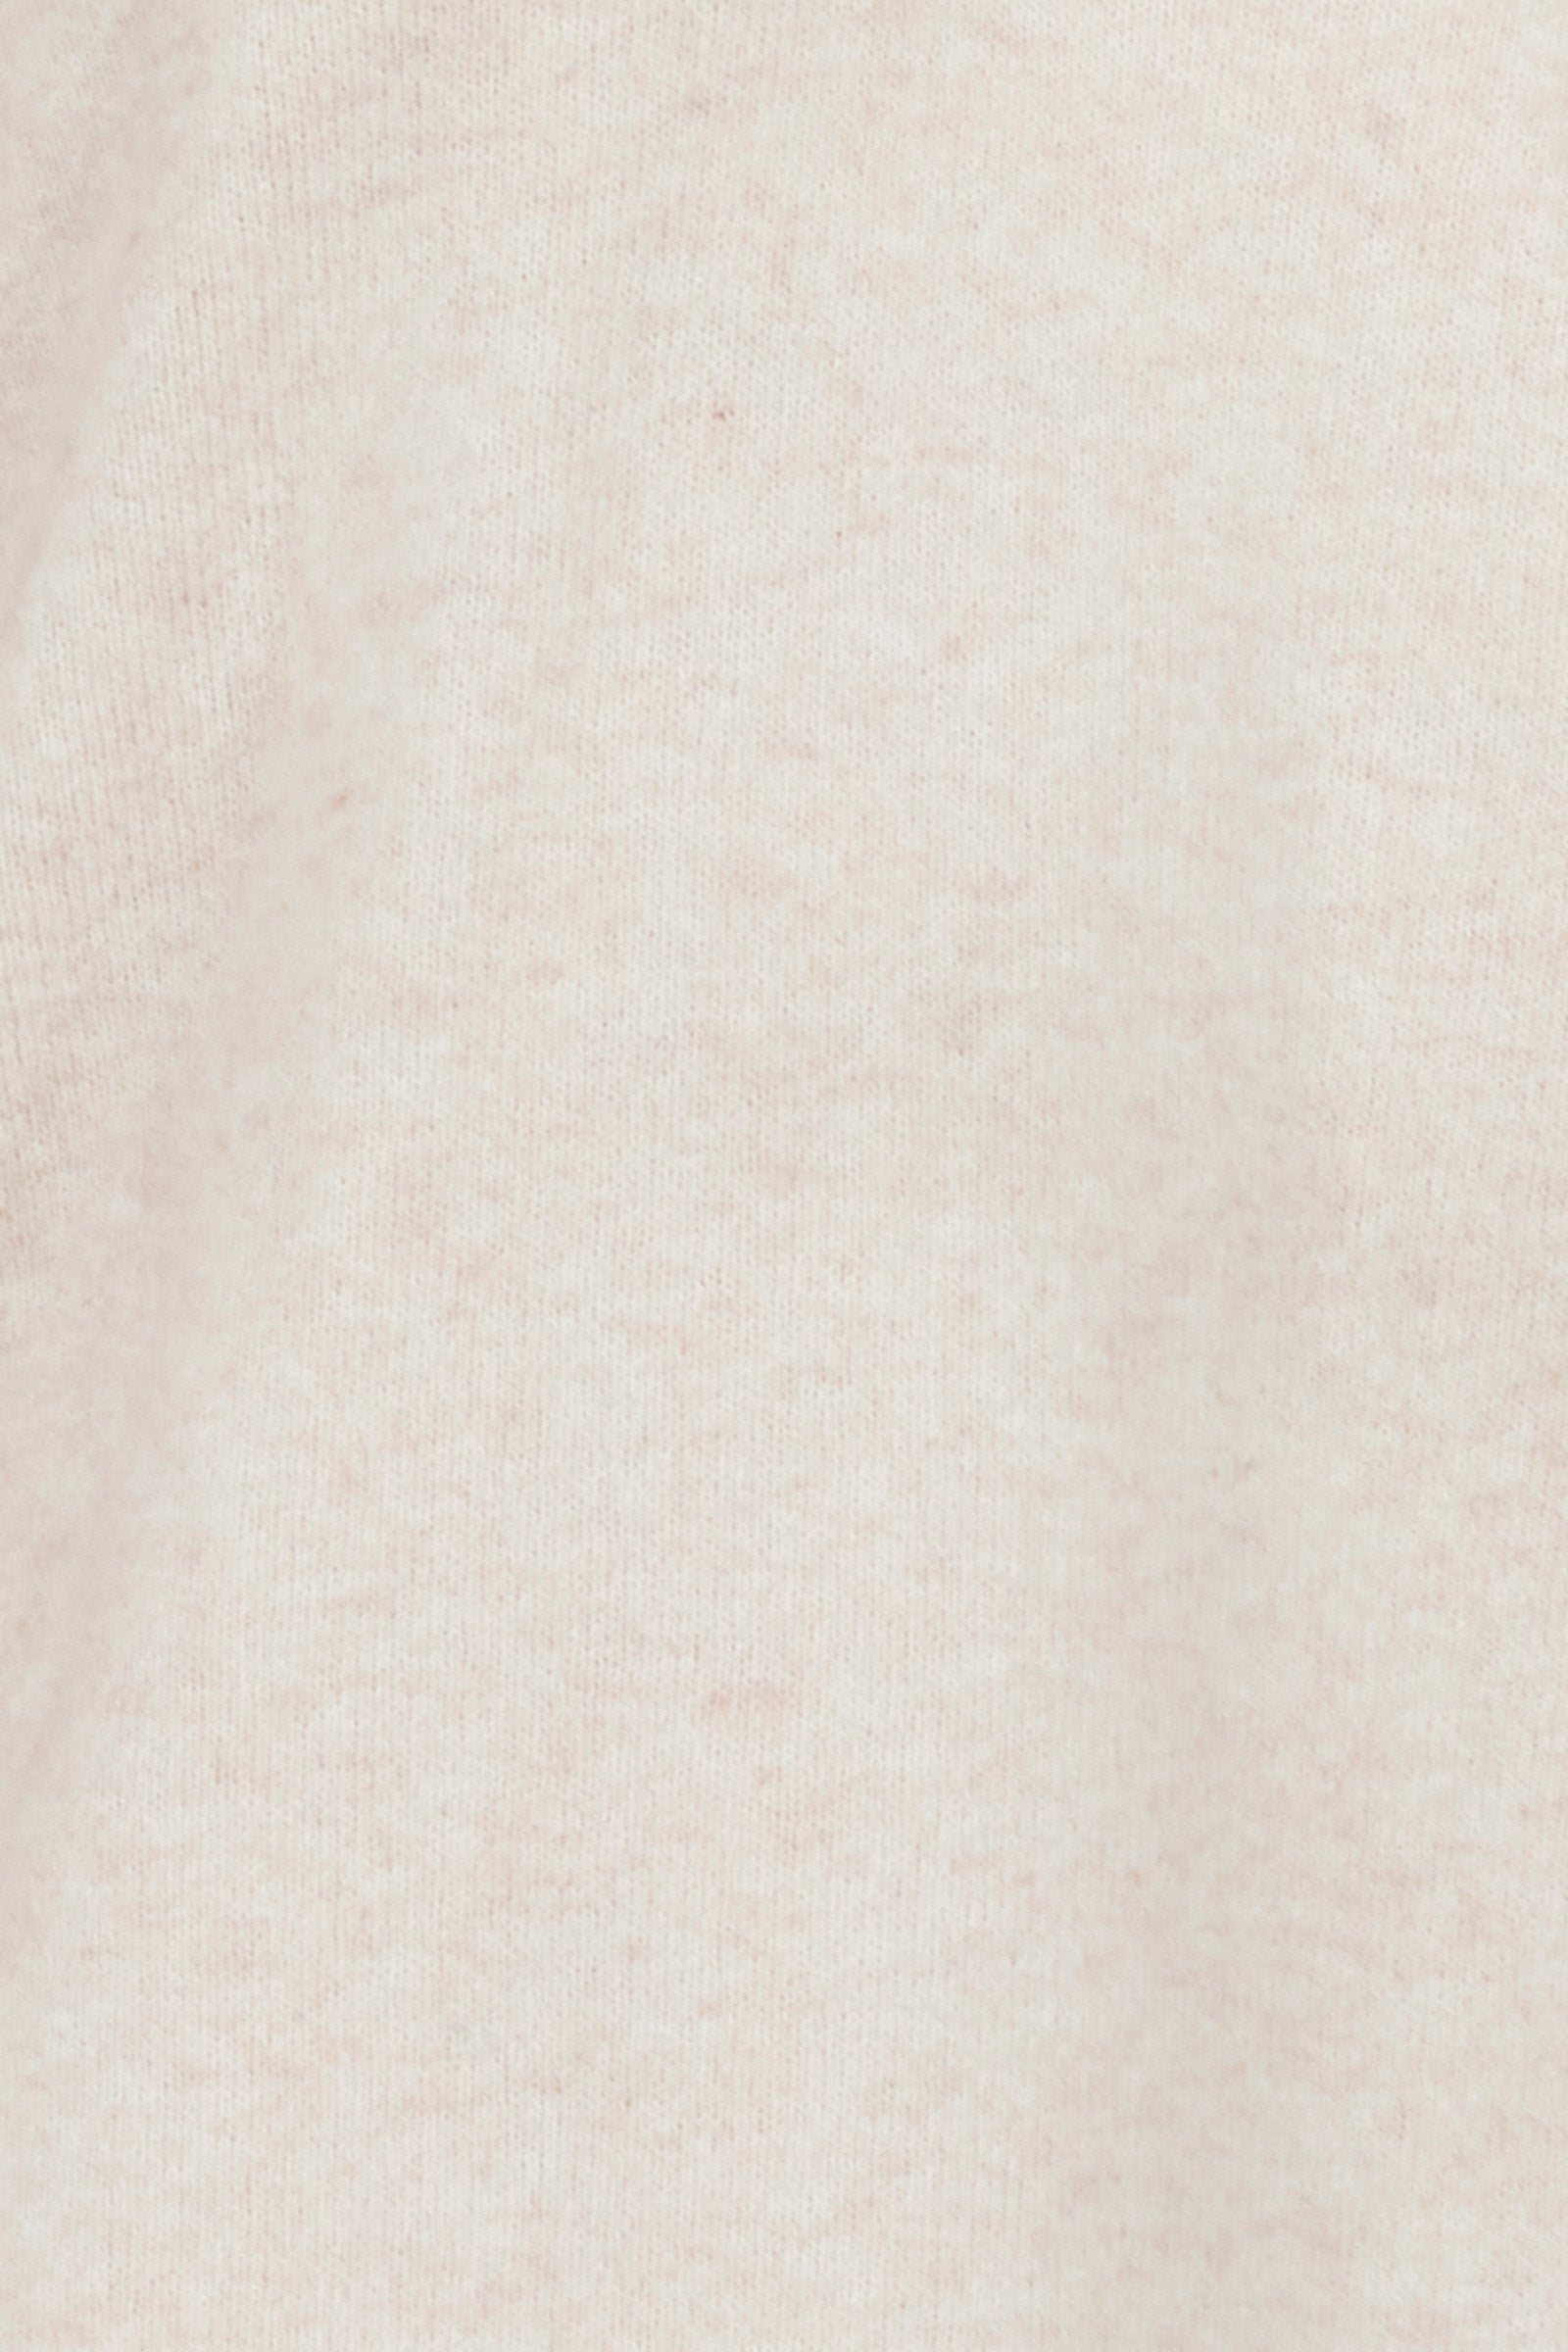 Paarl Longline Cardigan - Oat - eb&ive Clothing - Knit Cardigan Long One Size